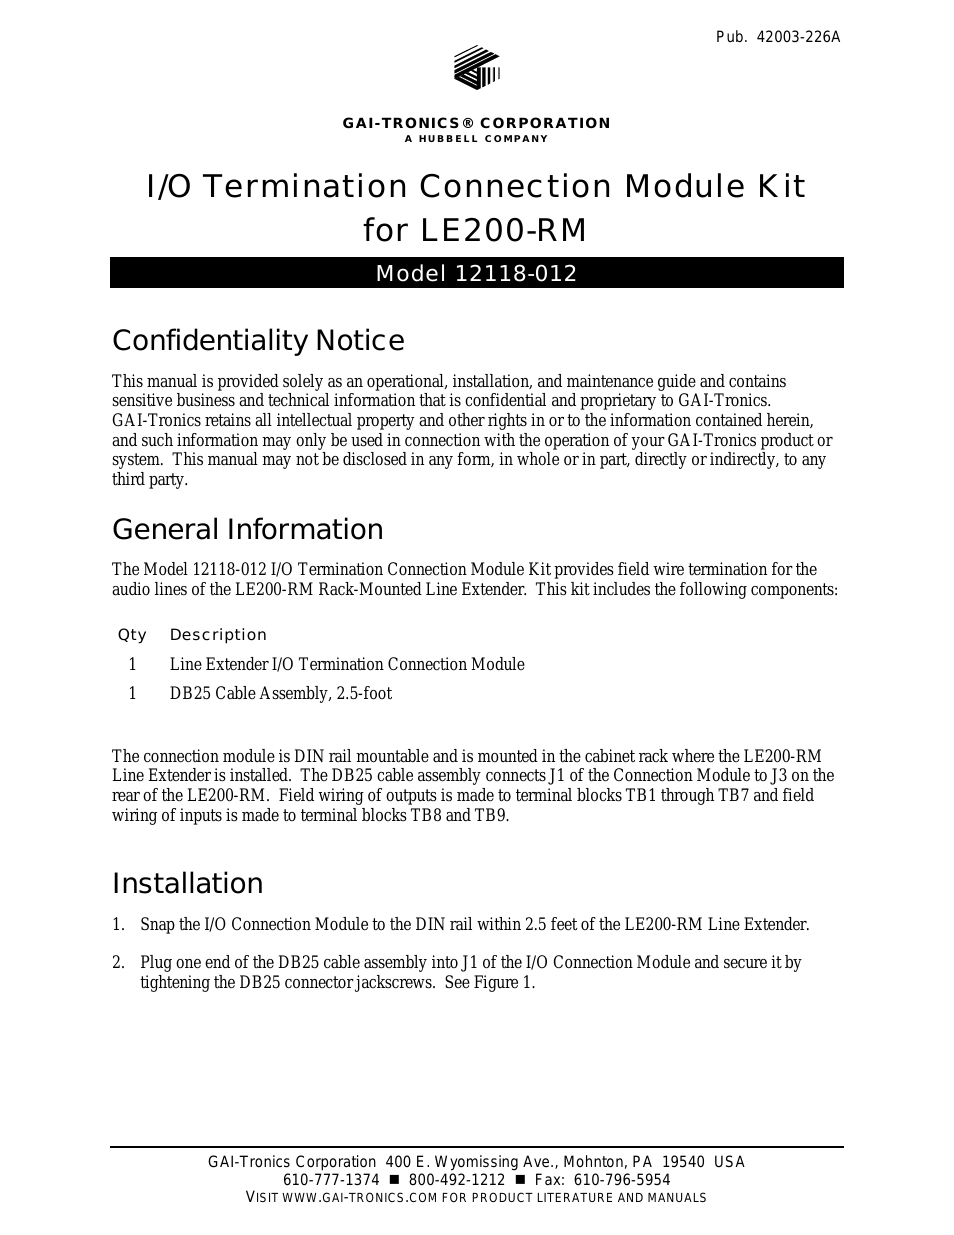 12118-012 I/O Termination Connection Module Kit for LE200RM